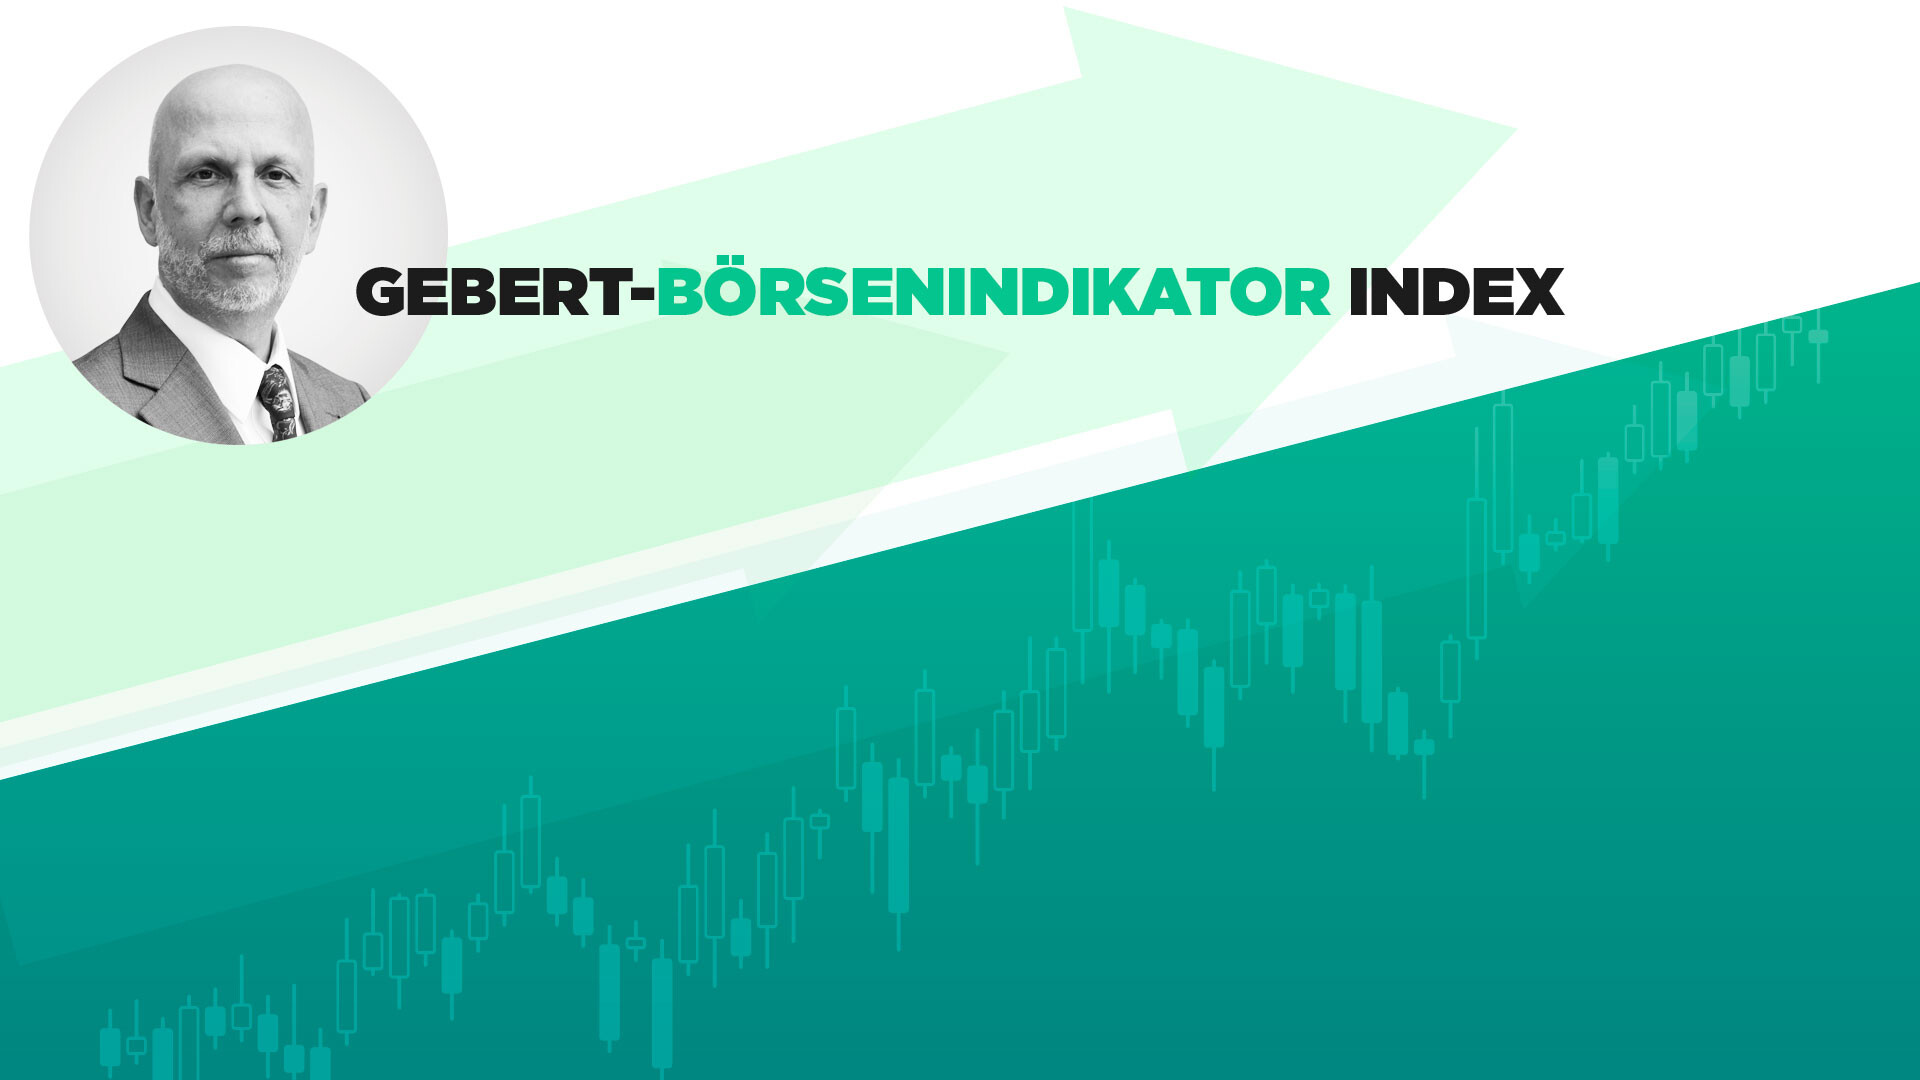 Gebert-Börsenindikator Index